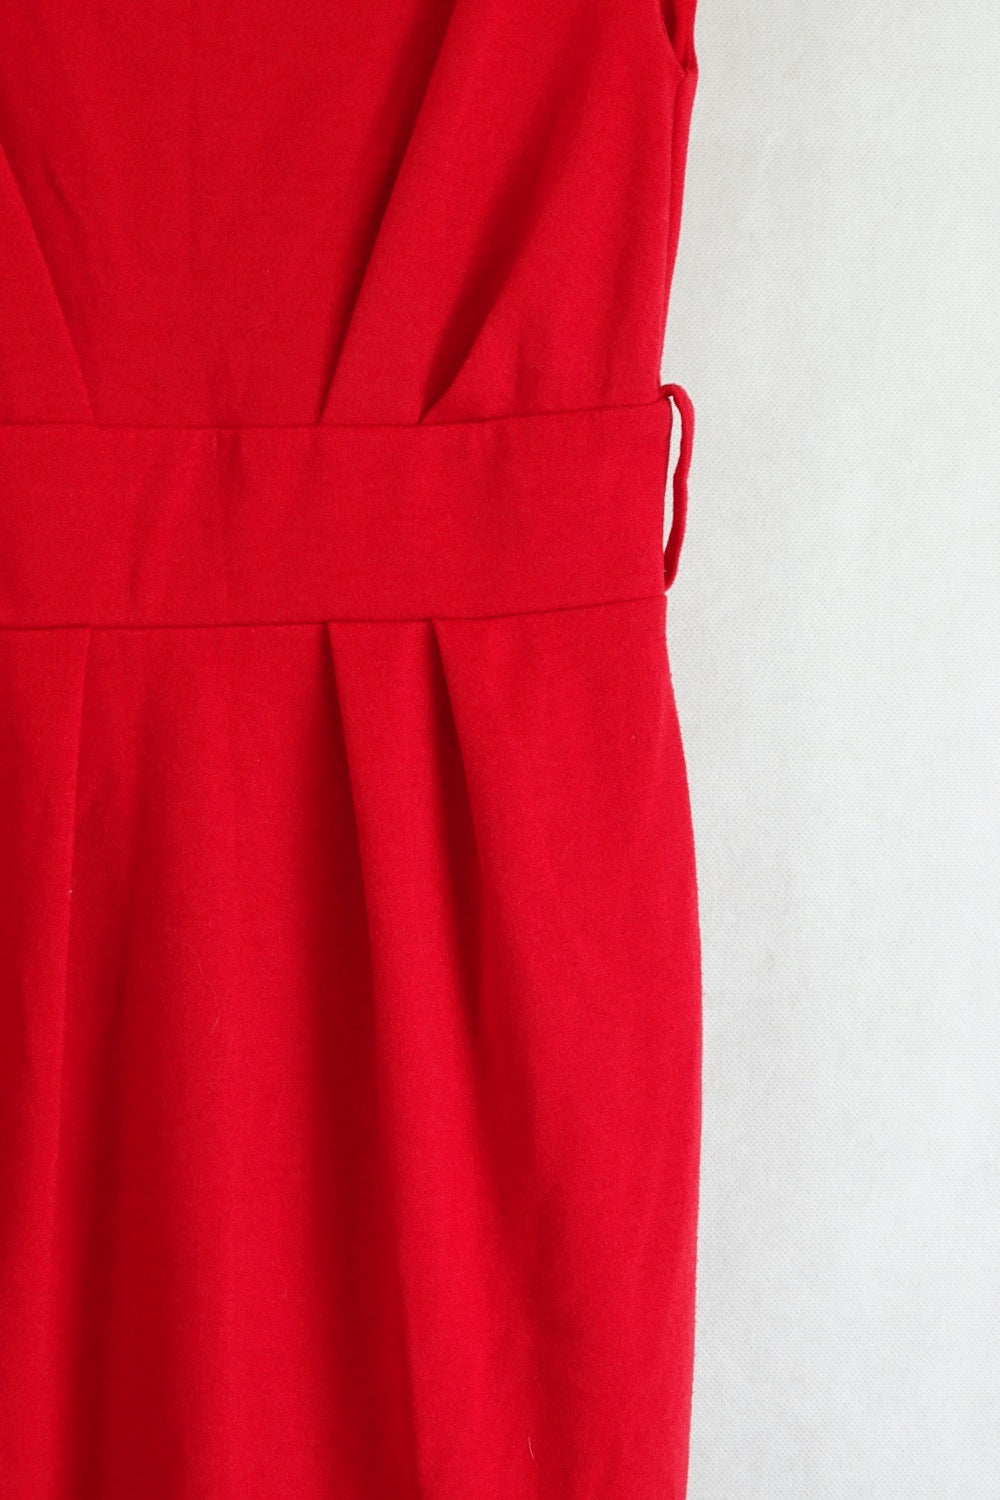 Dorothy Perkins Red Dress 36 ( AU 8)